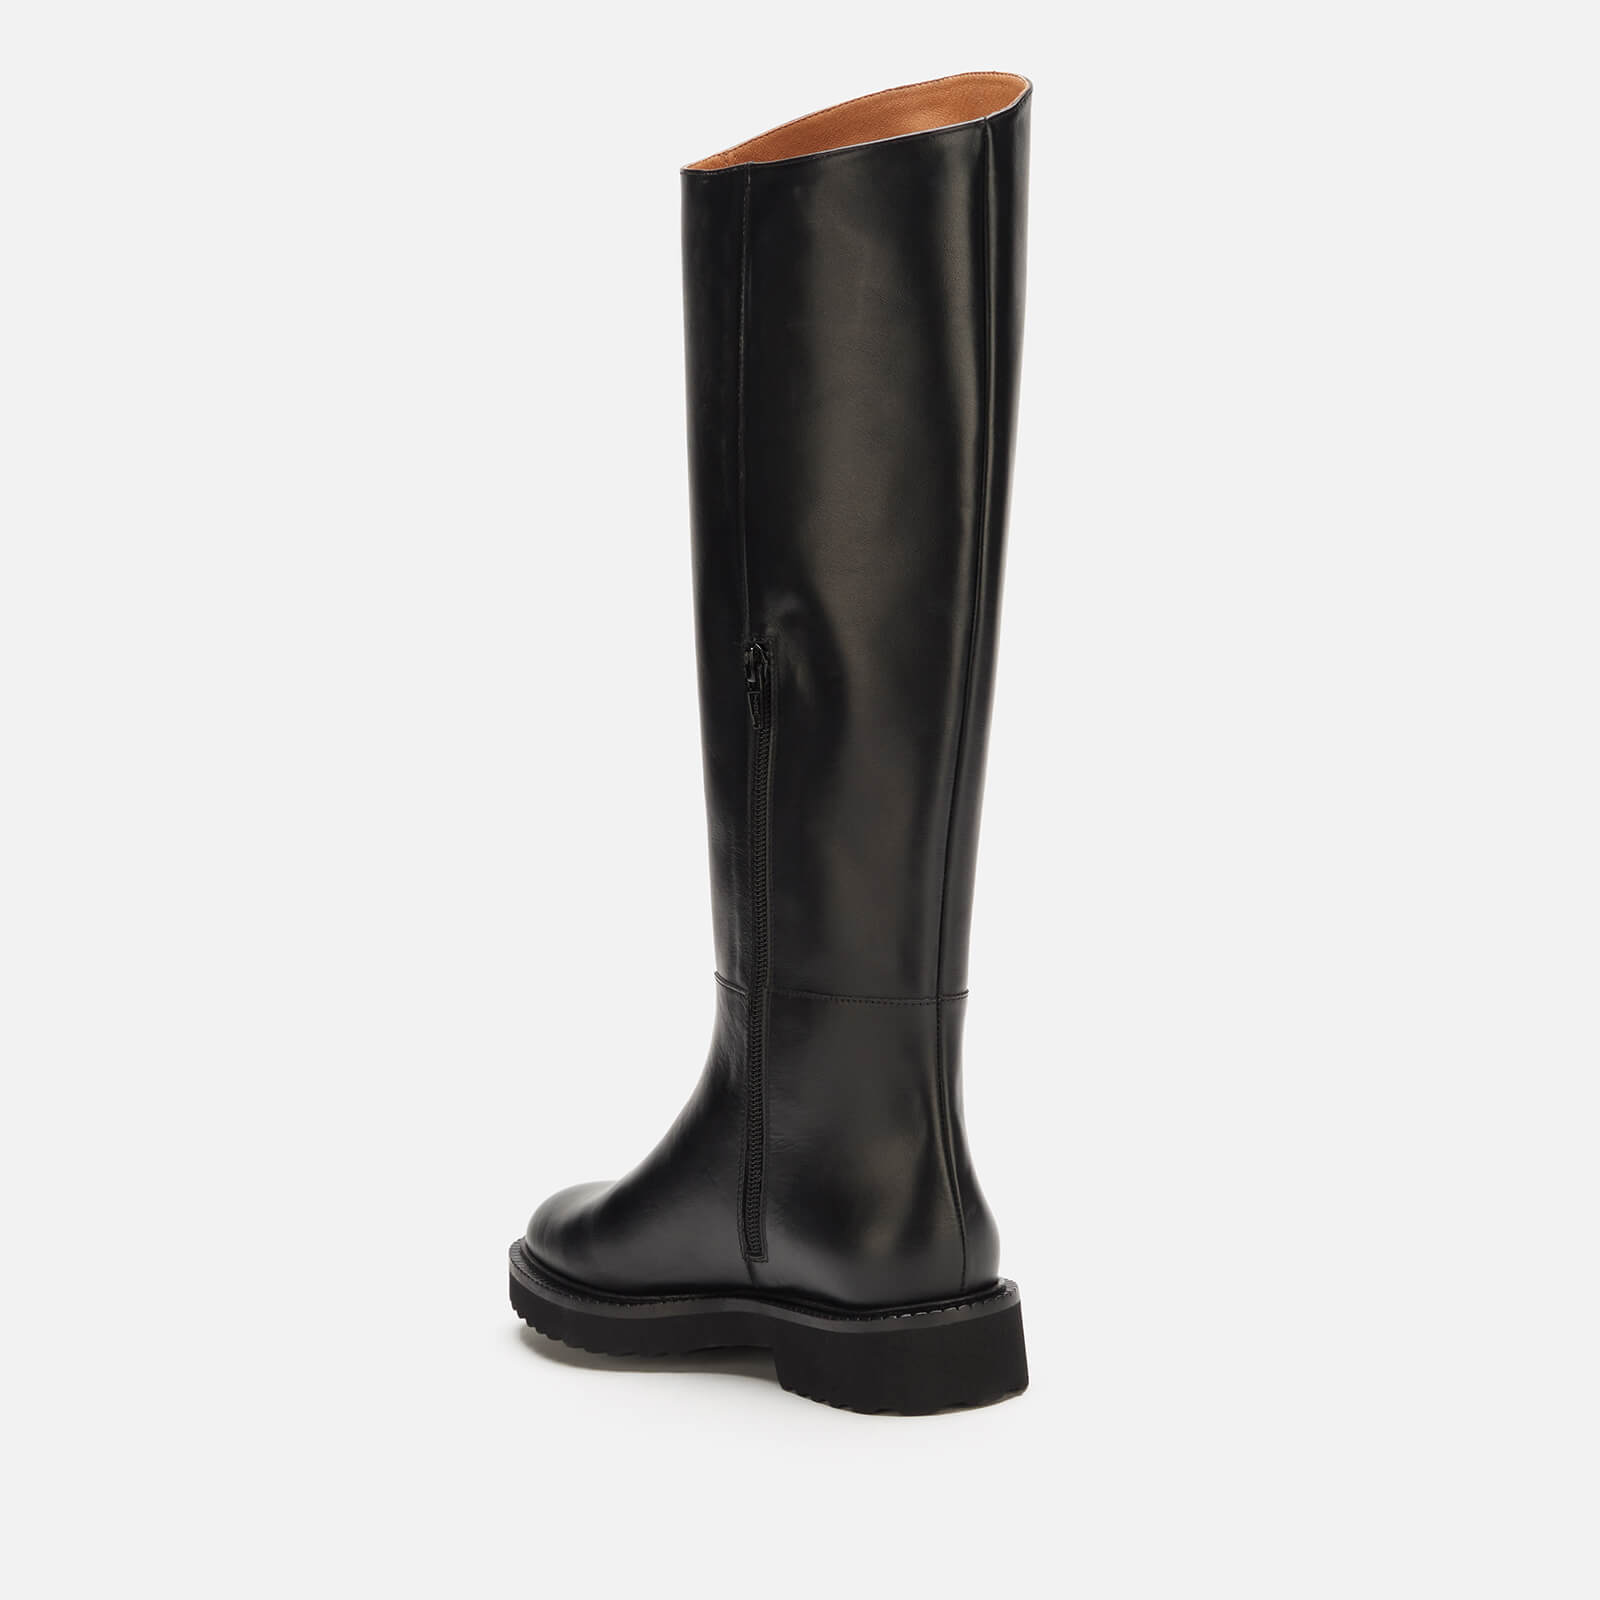 Whistles Women's Hadlow Knee High Riding Boots - Black - Uk 3 33787 Mens Footwear, Black